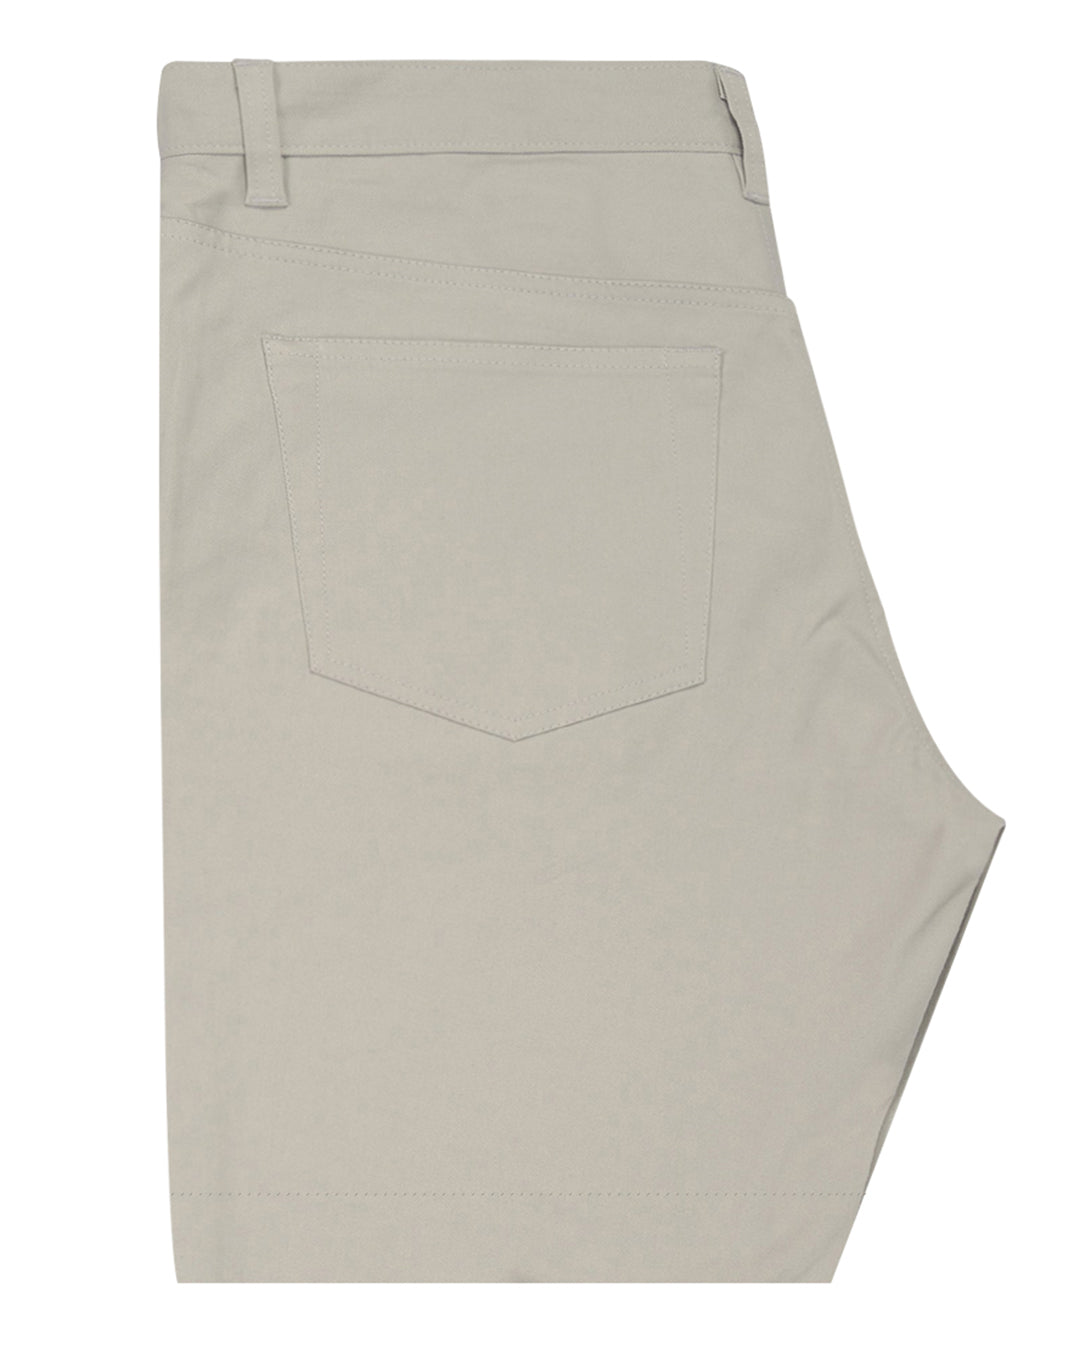 Pastel Stone Grey Twill Shorts